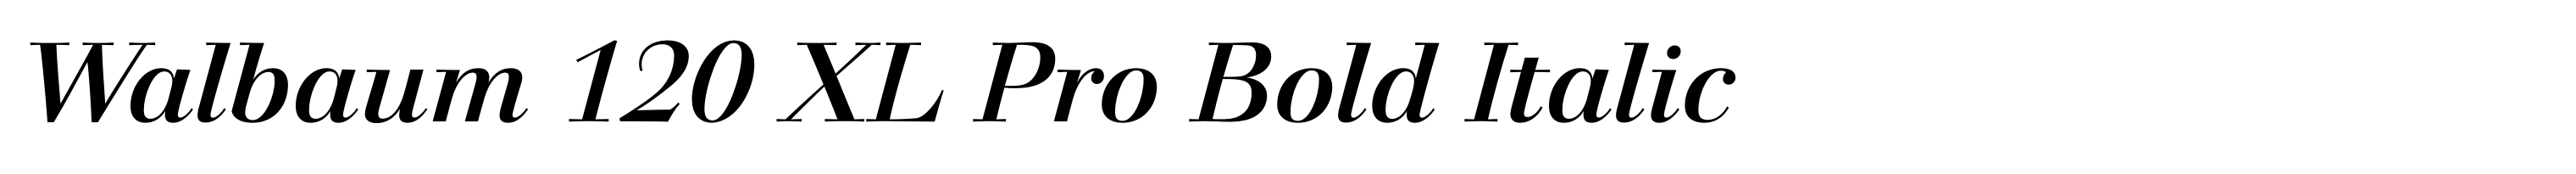 Walbaum 120 XL Pro Bold Italic